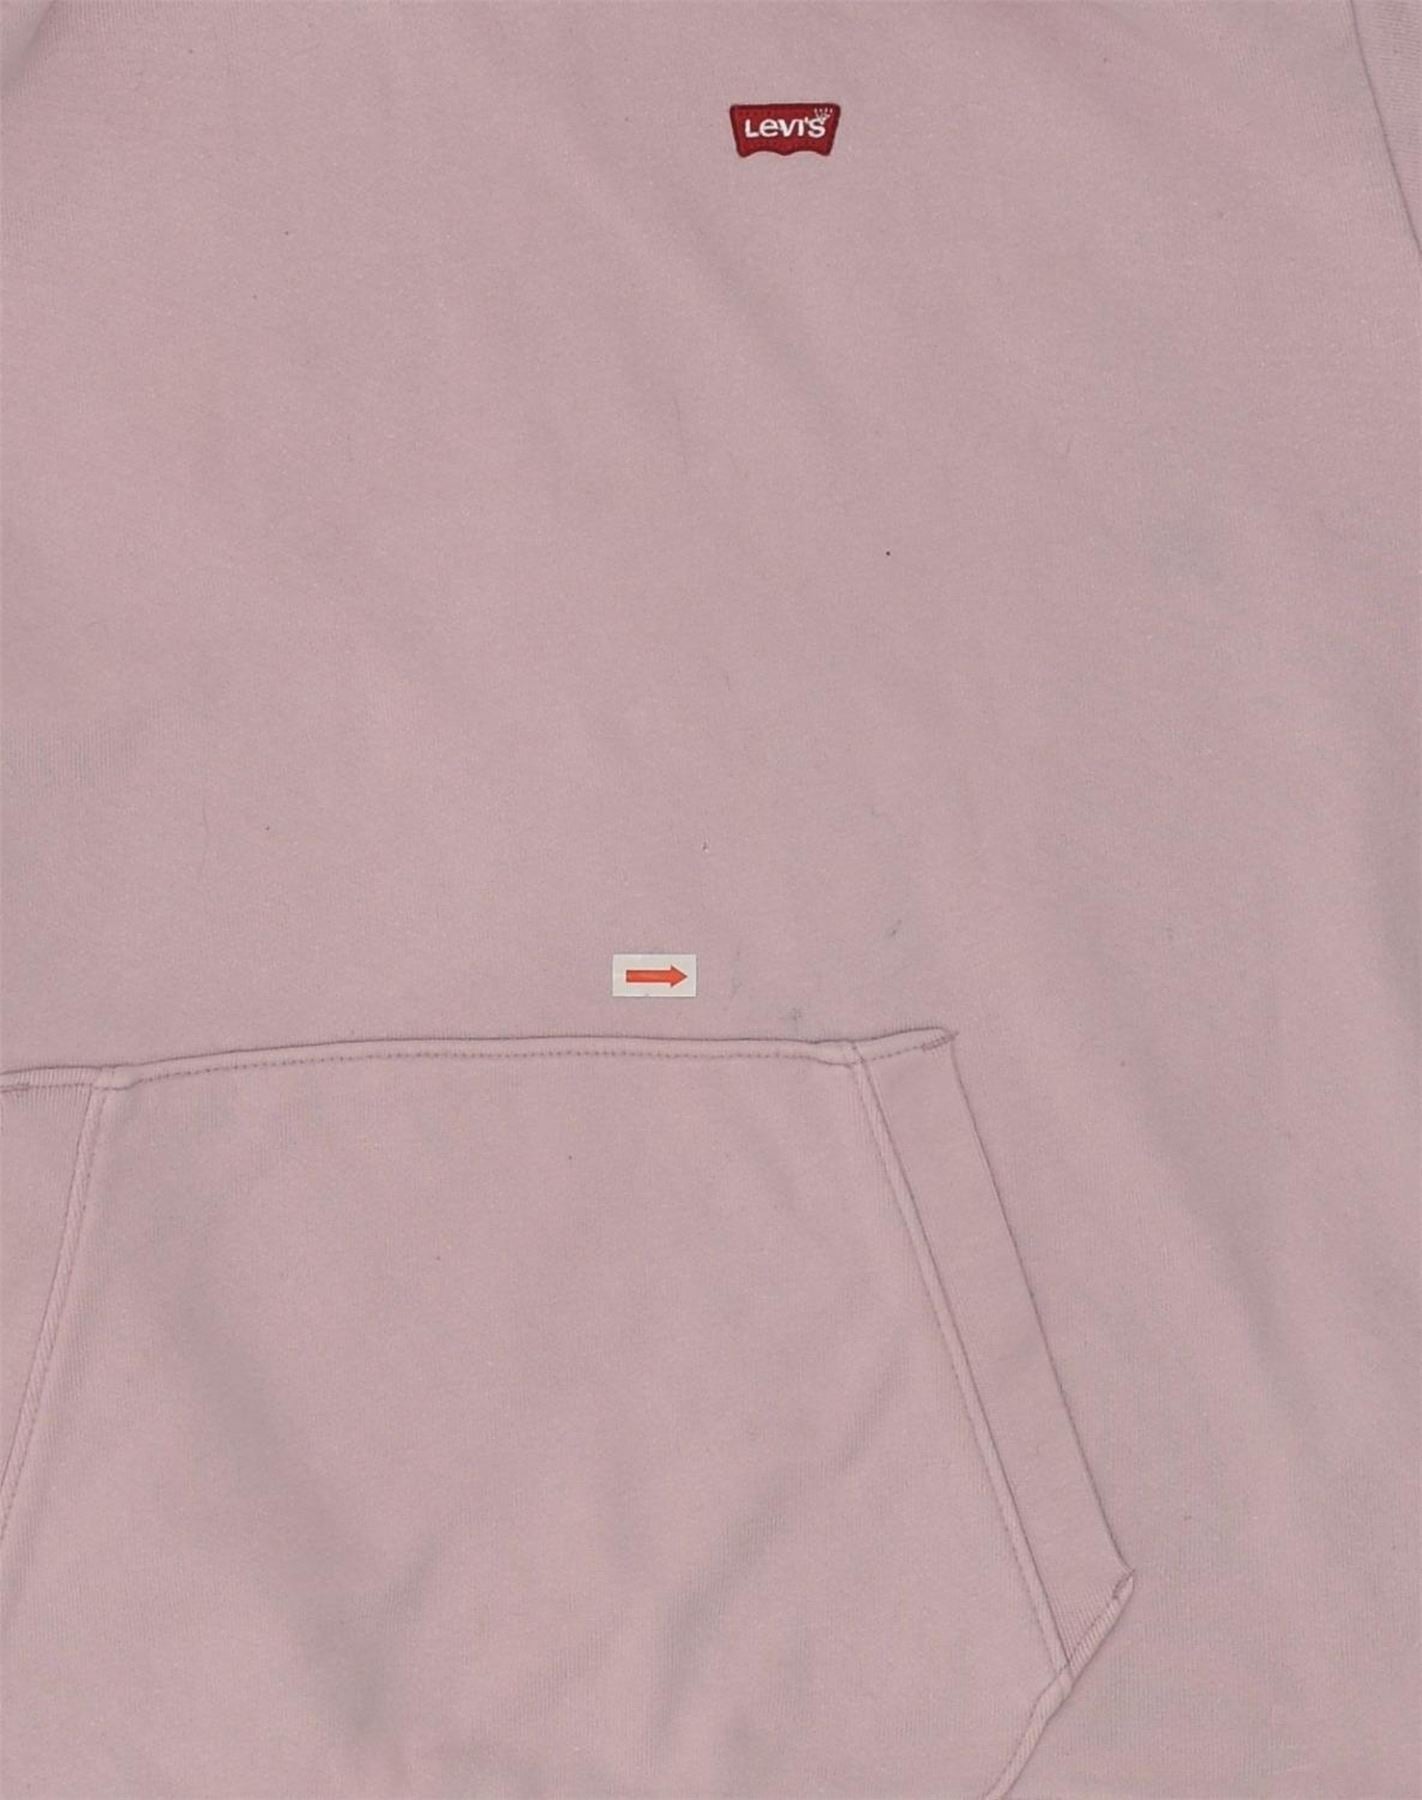 LEVI'S Womens Hoodie Jumper UK 12 Medium Pink Cotton